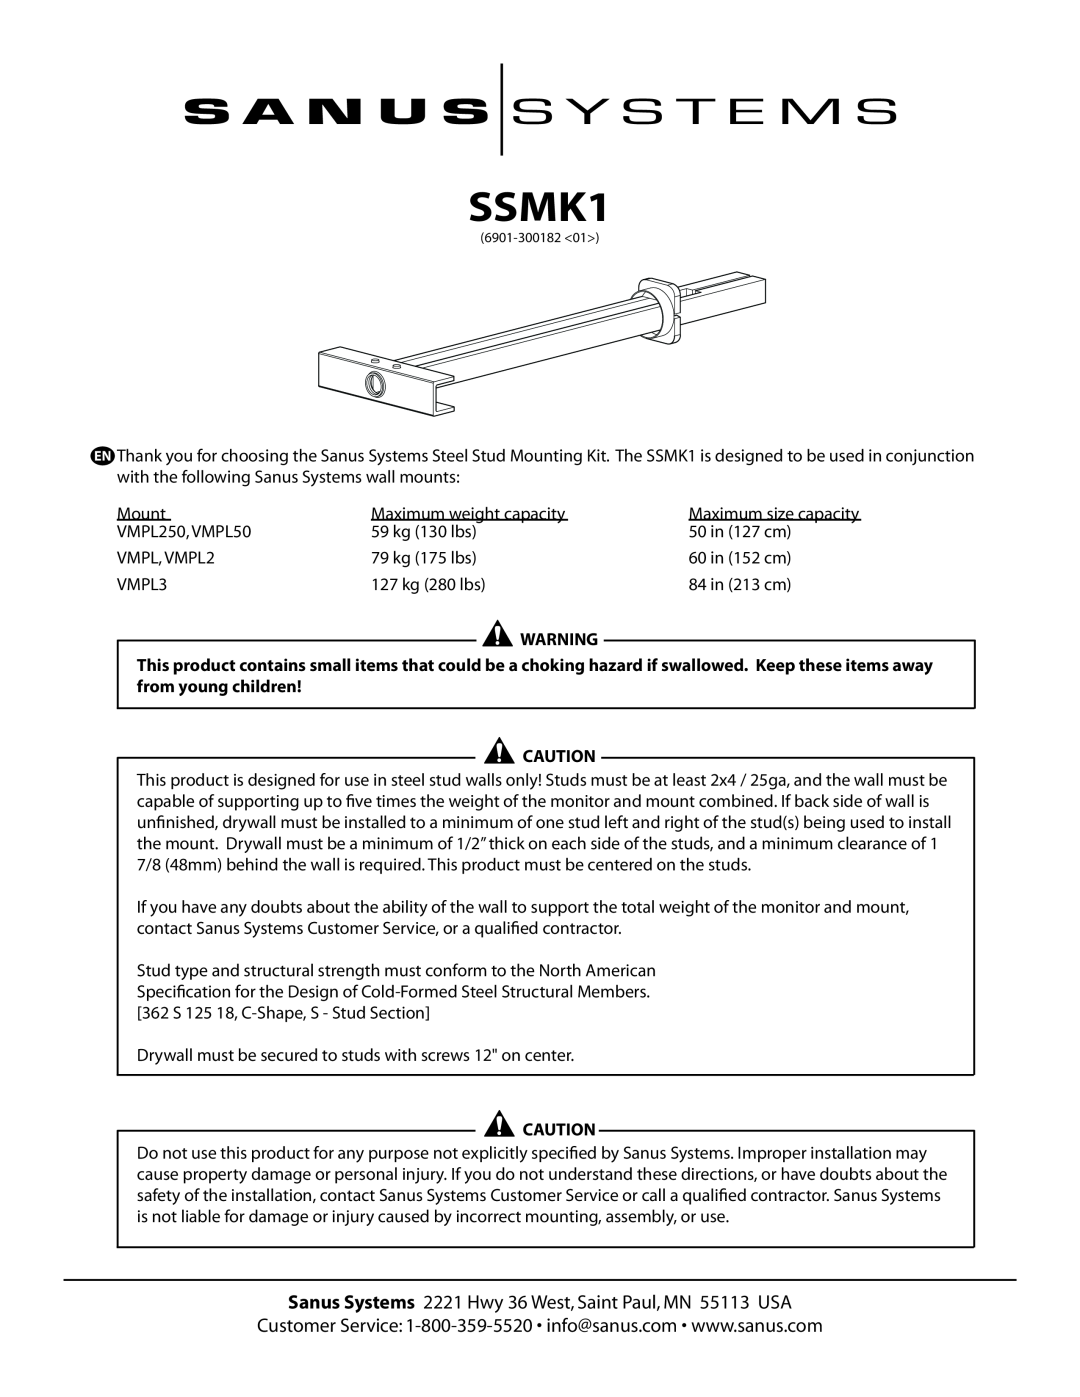 Sanus Systems SSMK1 manual Sanus Systems 2221 Hwy 36 West, Saint Paul, MN 55113 USA 